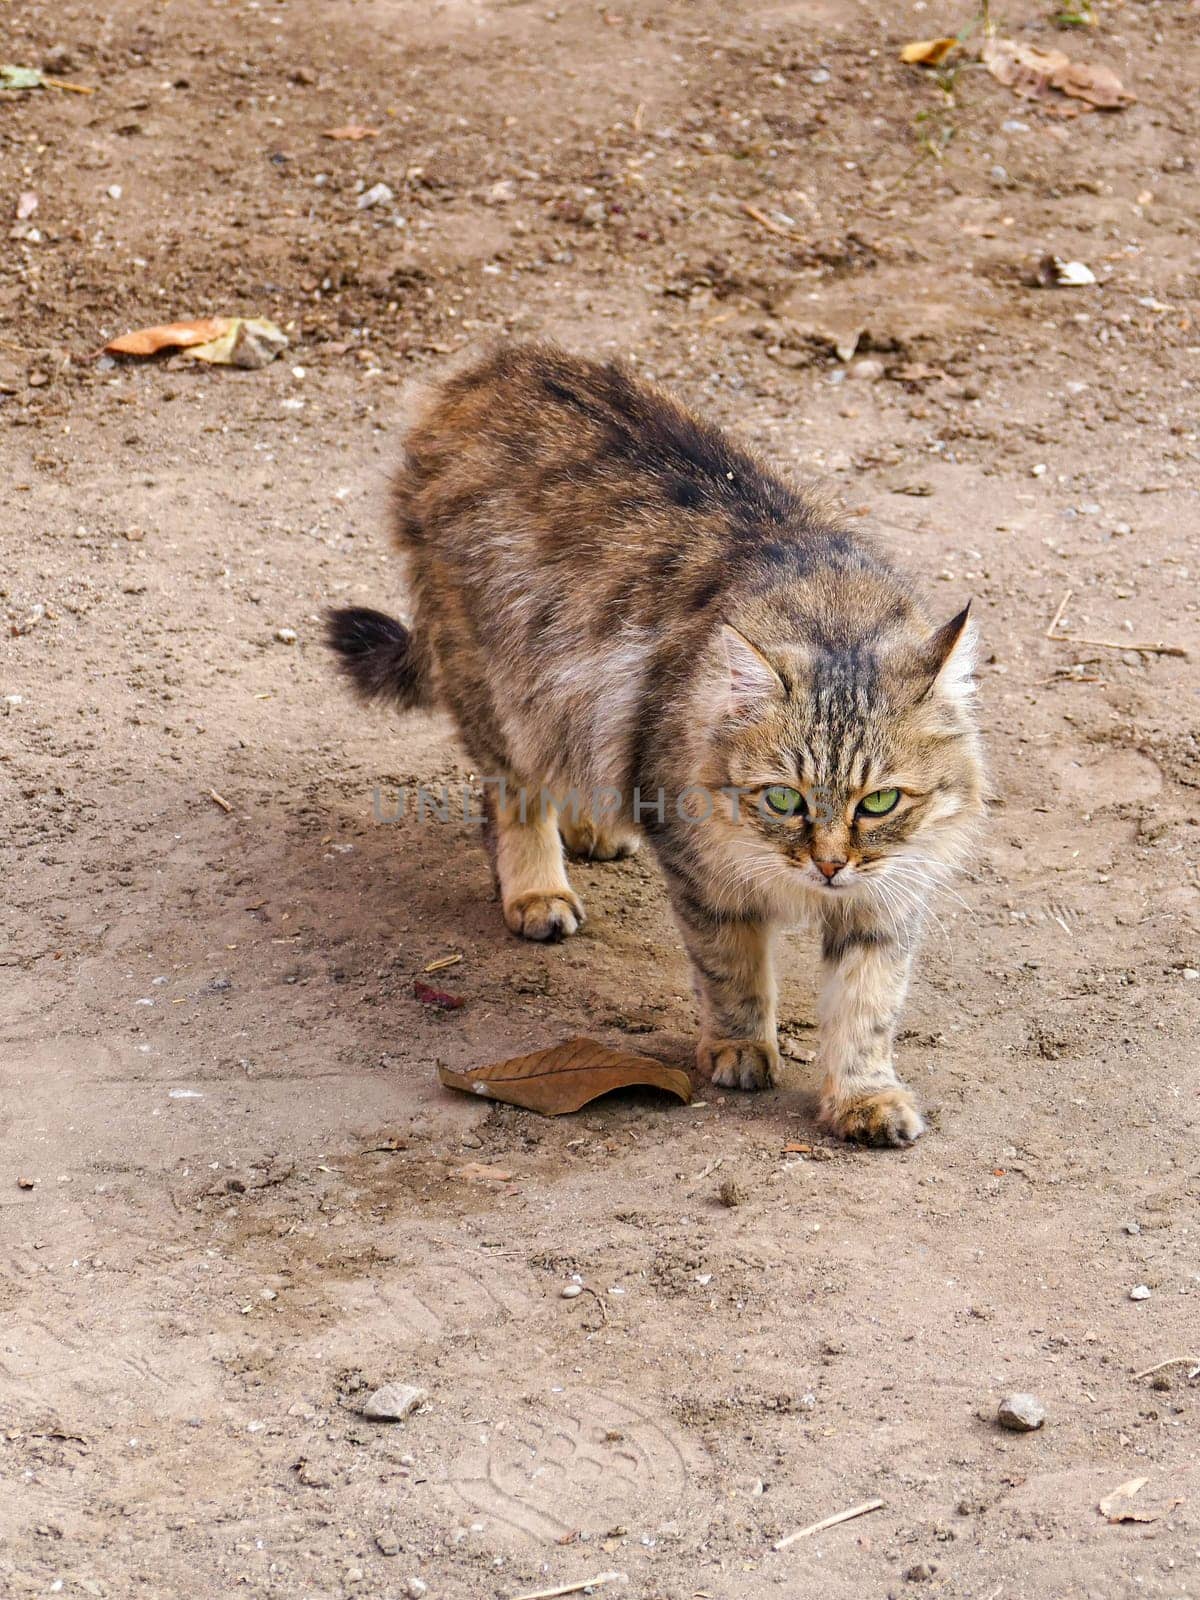 cute hypoallergenic stray cat,siberian cat,Hypoallergenic breed of cat